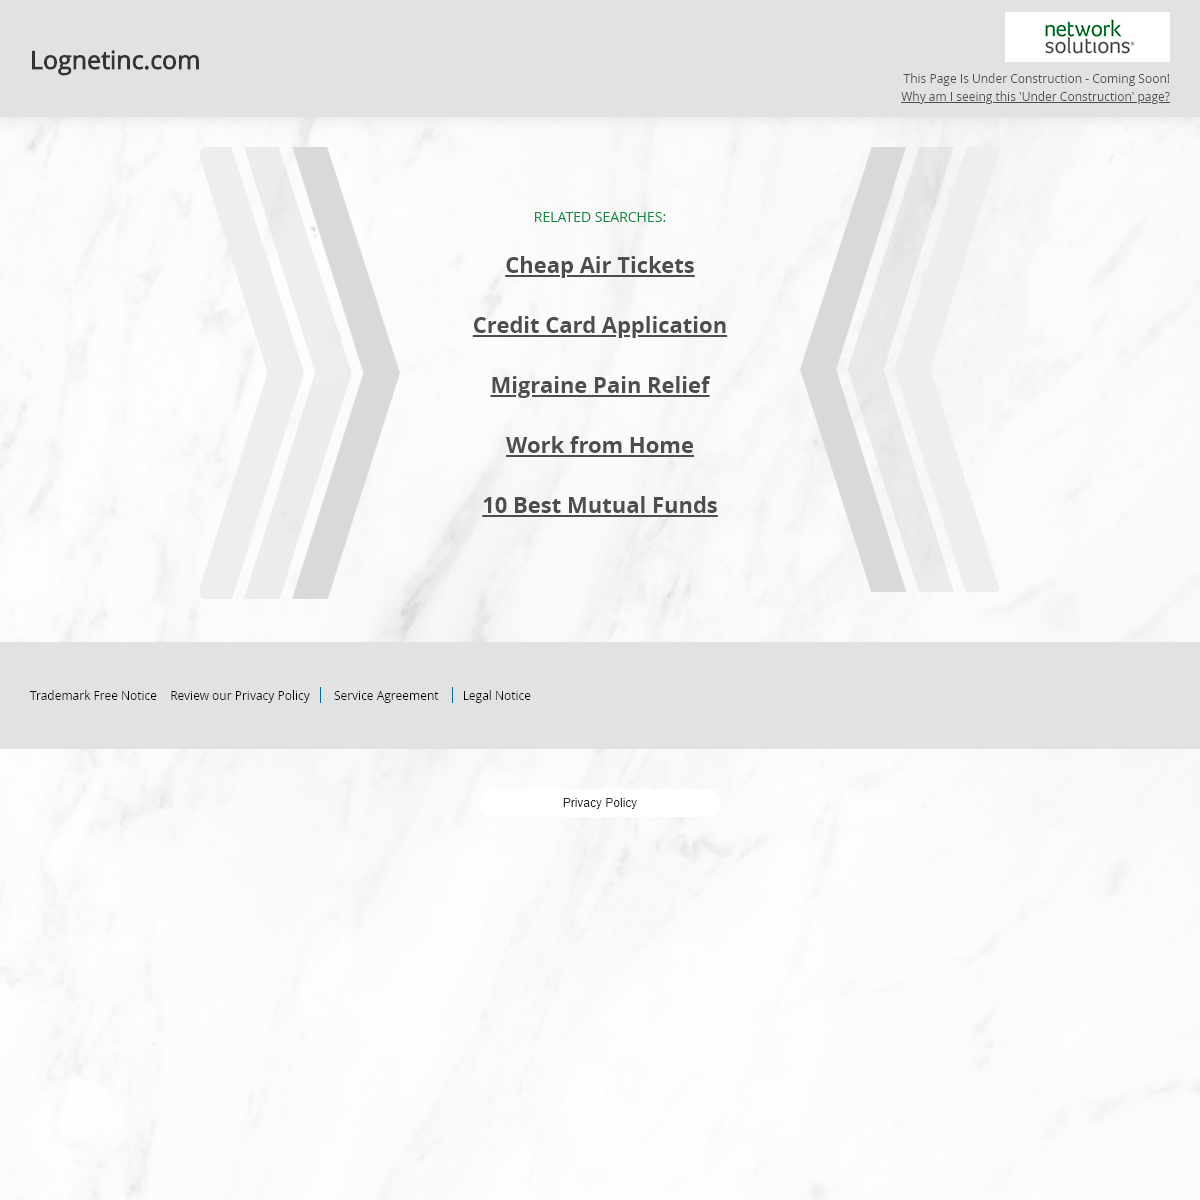 A complete backup of lognetinc.com